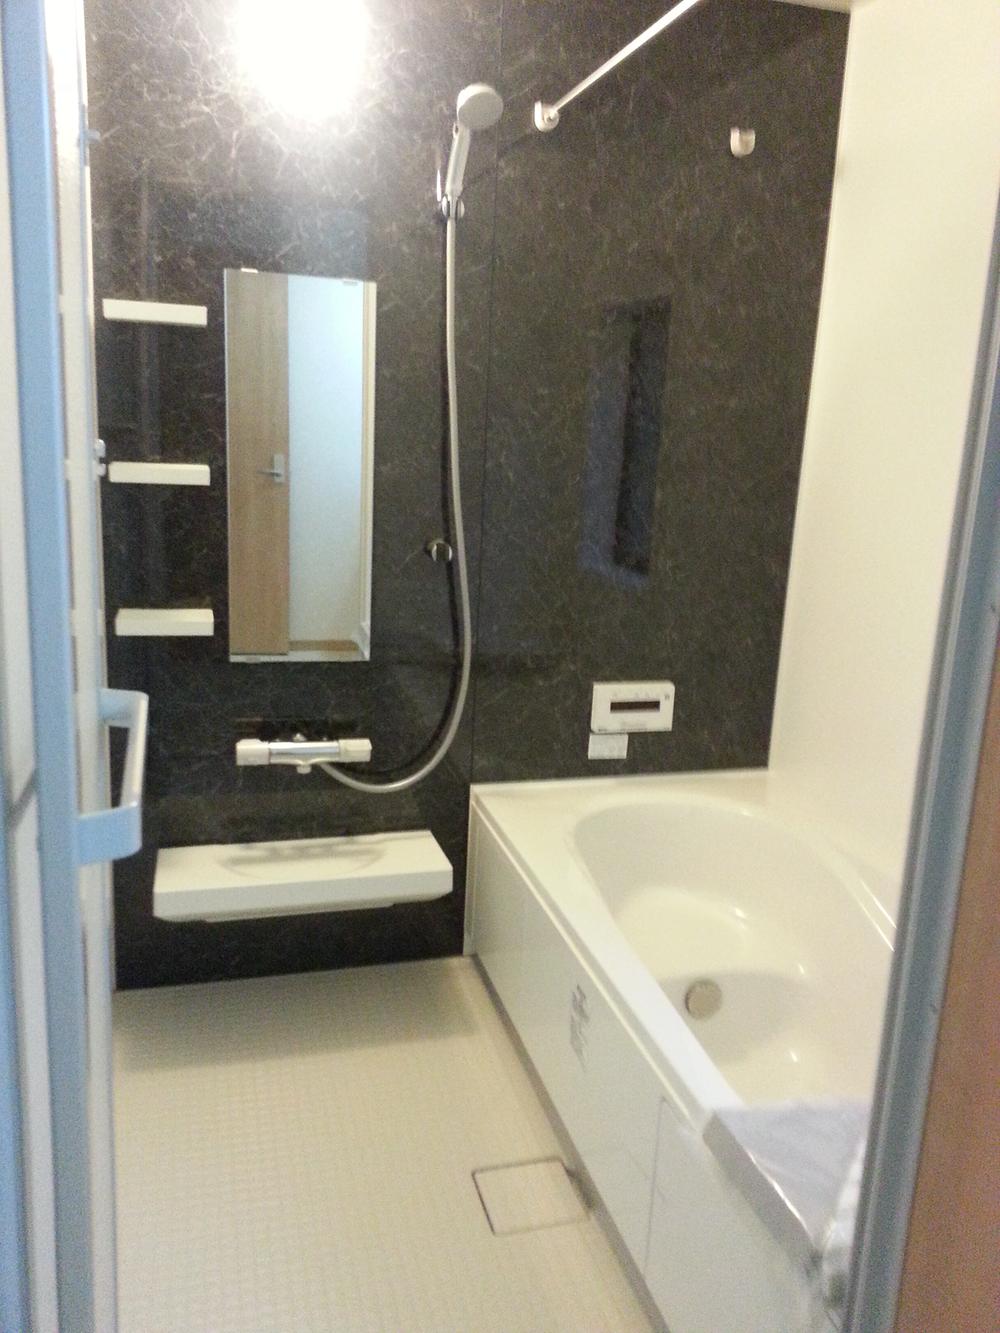 Bathroom. Indoor (November 3, 2013) Shooting LIXIL Kireiyu ◎ Kururin poi ◎ eco full shower other  ※ Same specifications image